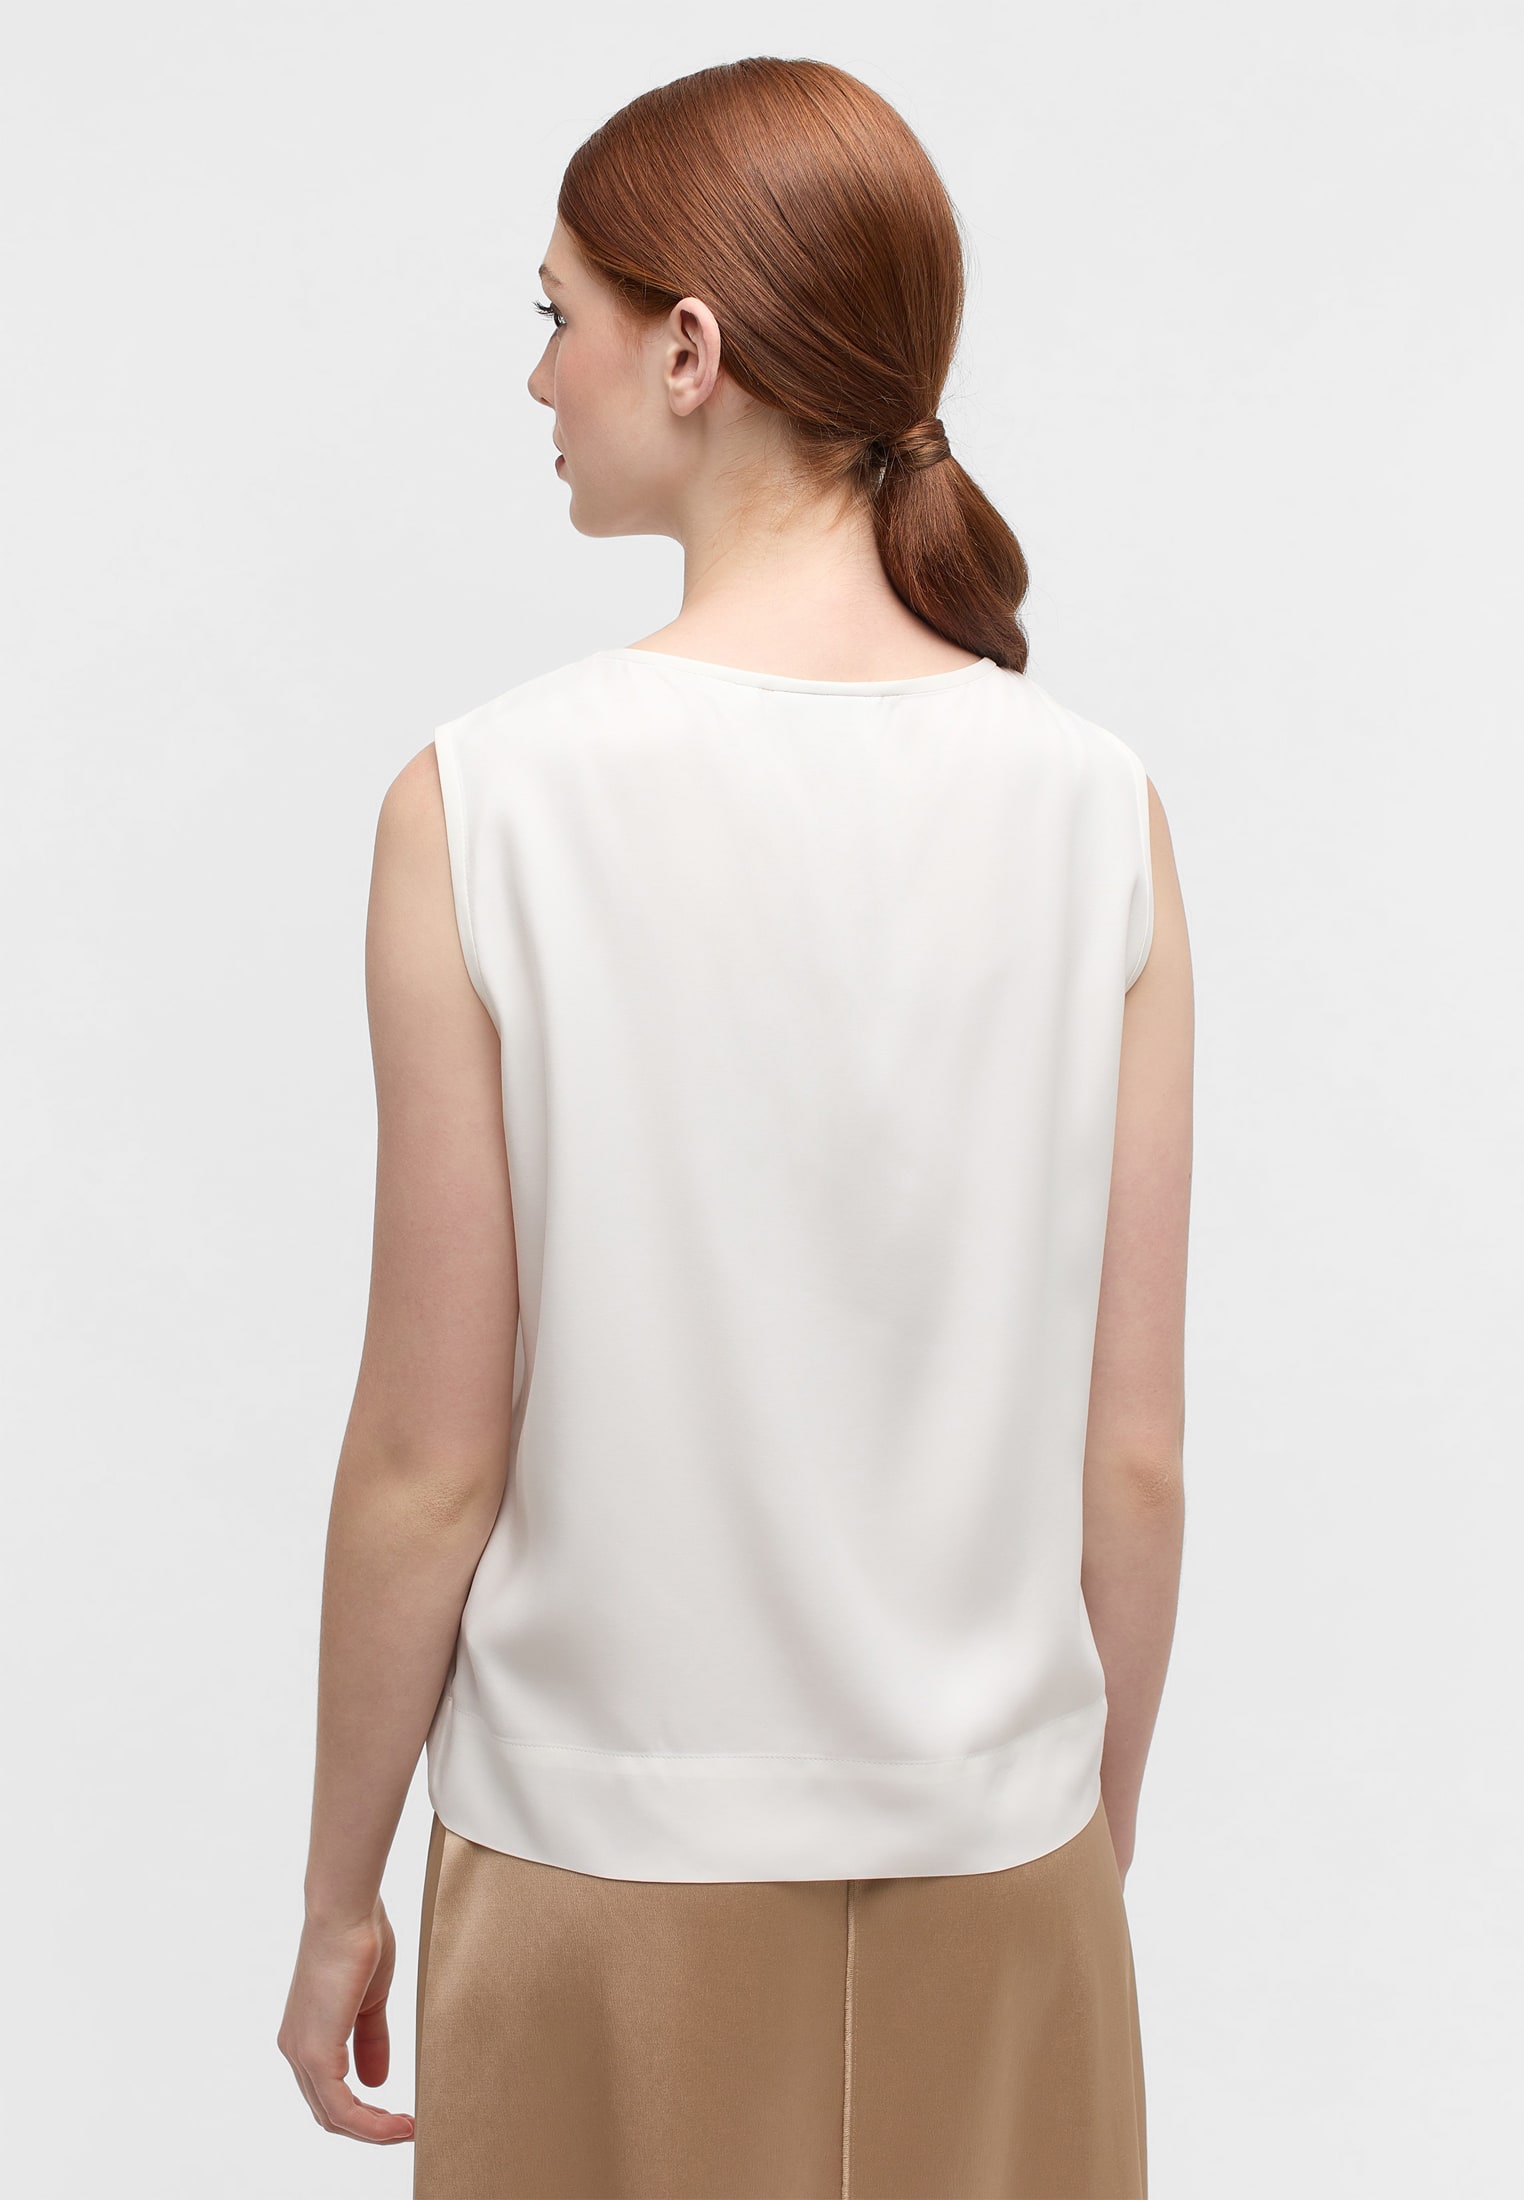 Bluse | | in off-white 2BL04345-00-02-54-sl | off-white | ohne Shirt 54 unifarben Viscose Arm